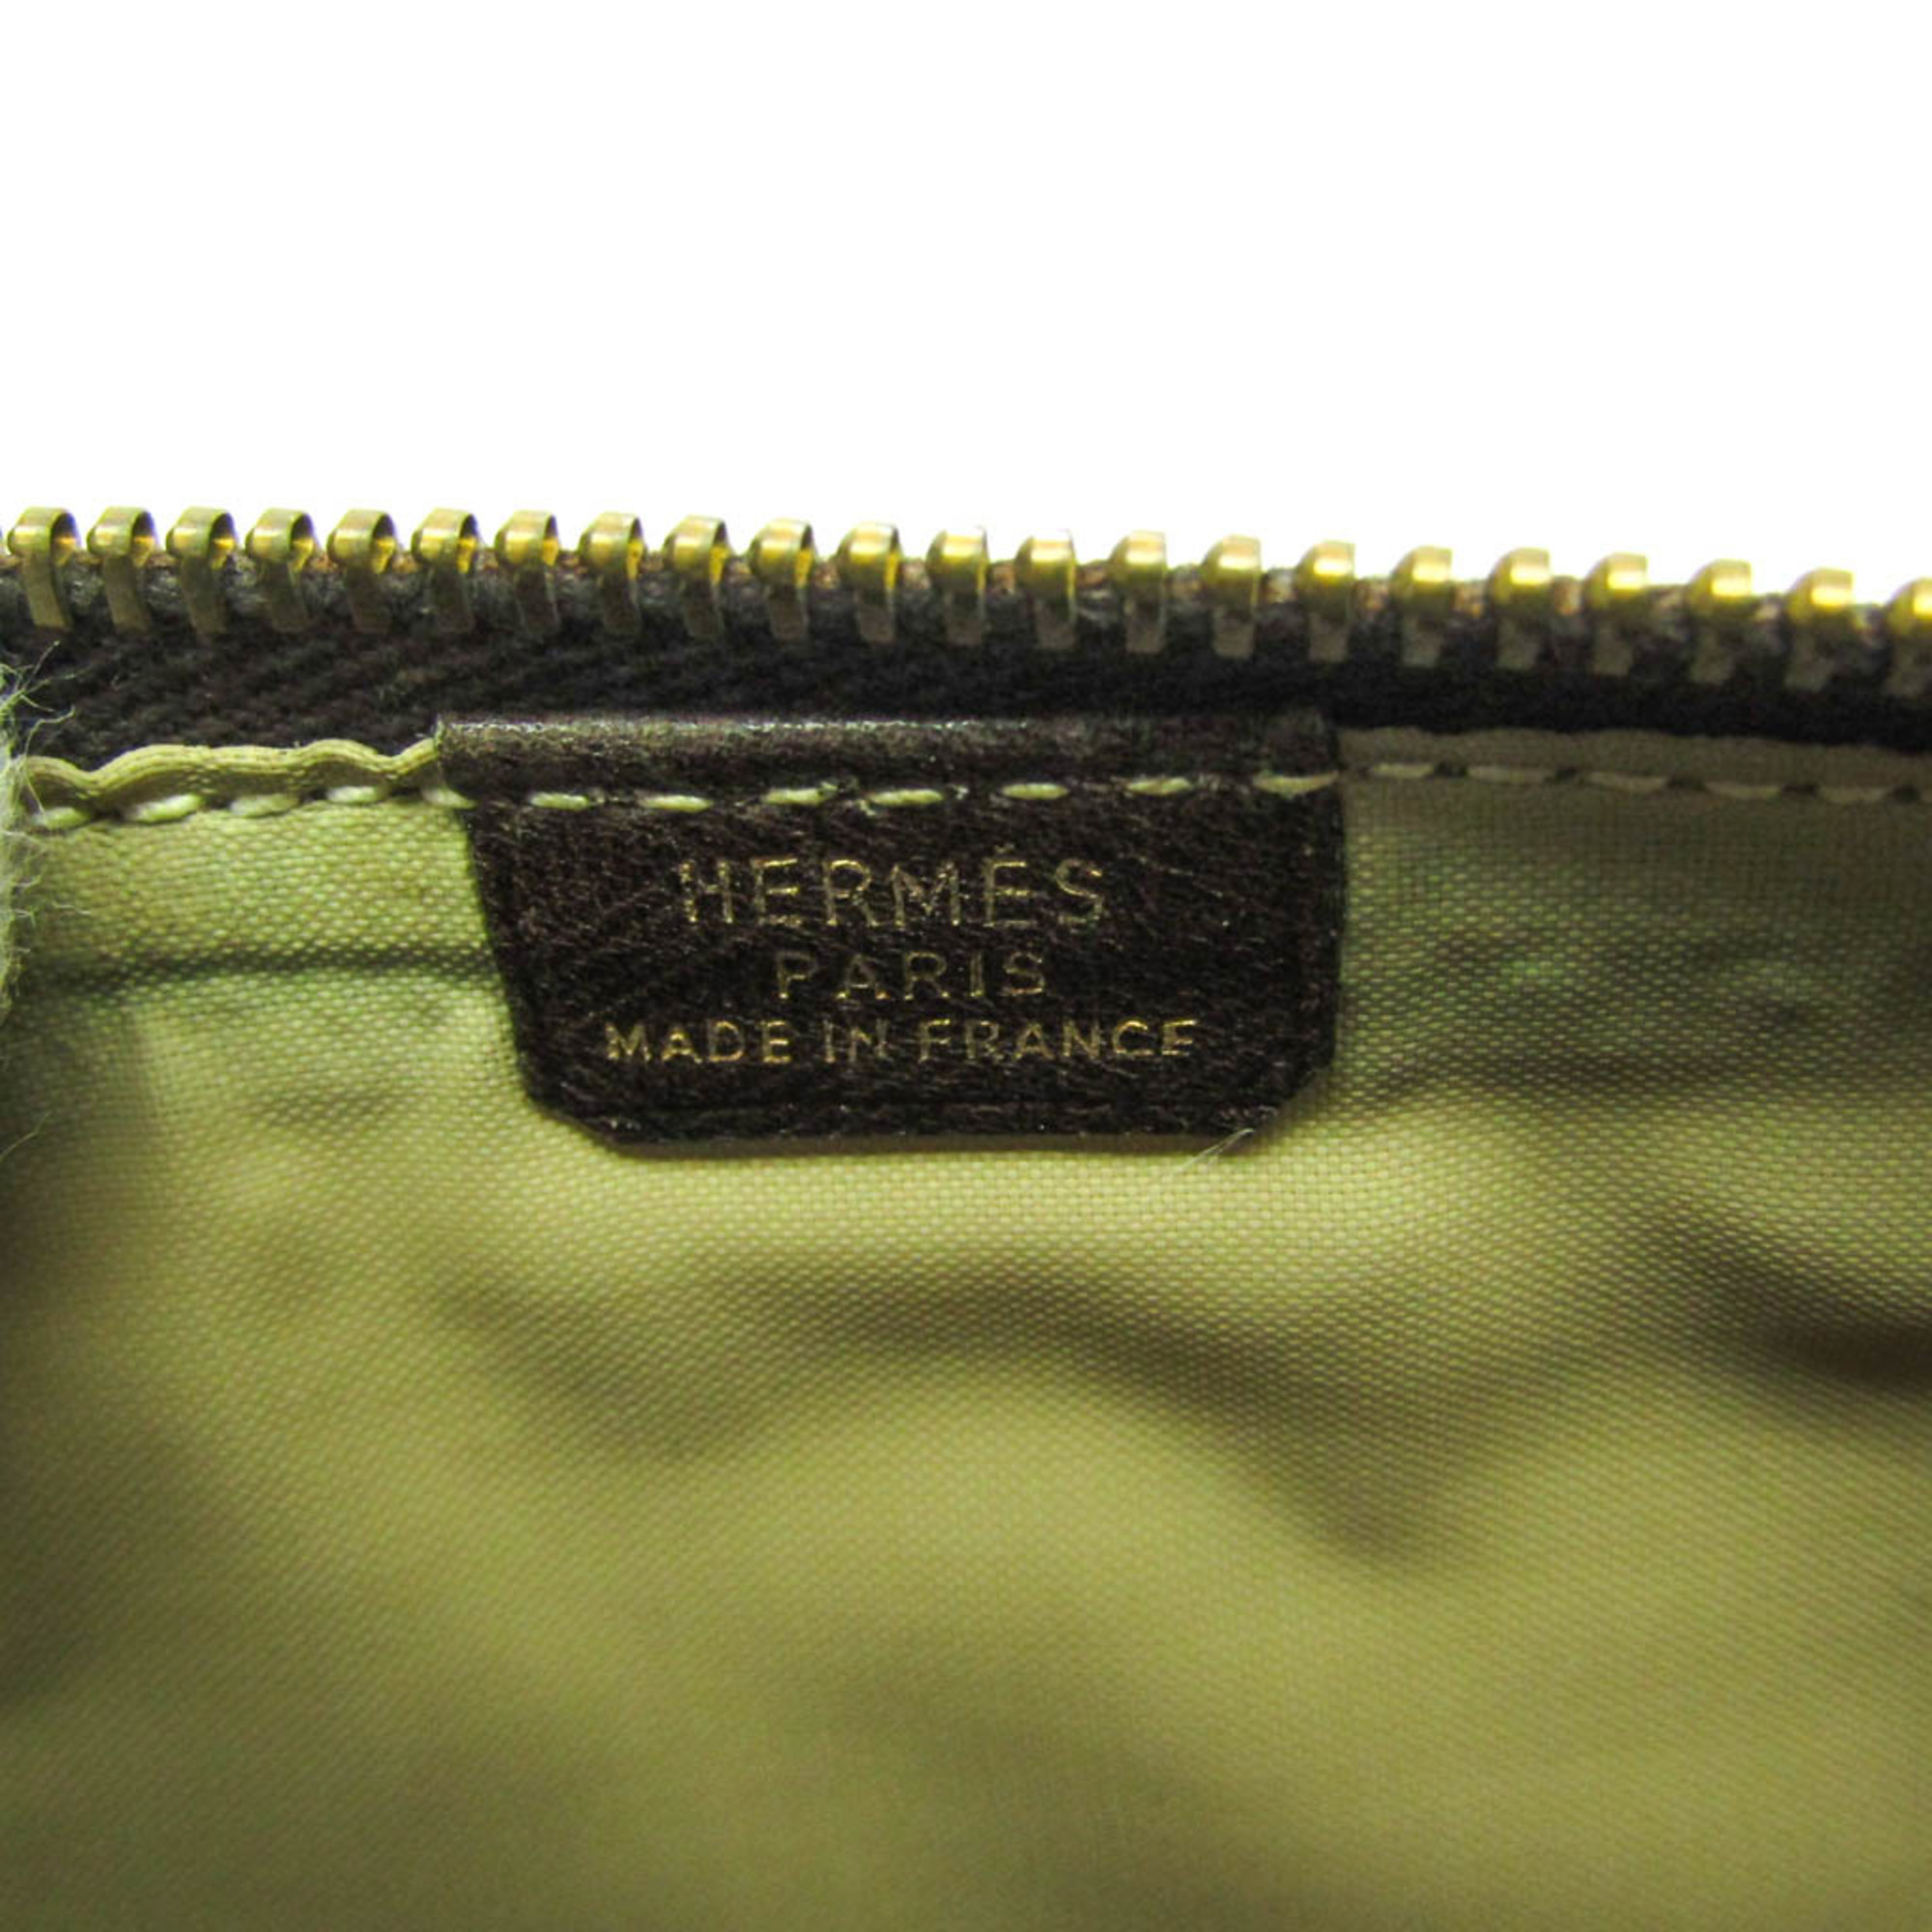 Hermes Men's Leather Clutch Bag Dark Brown